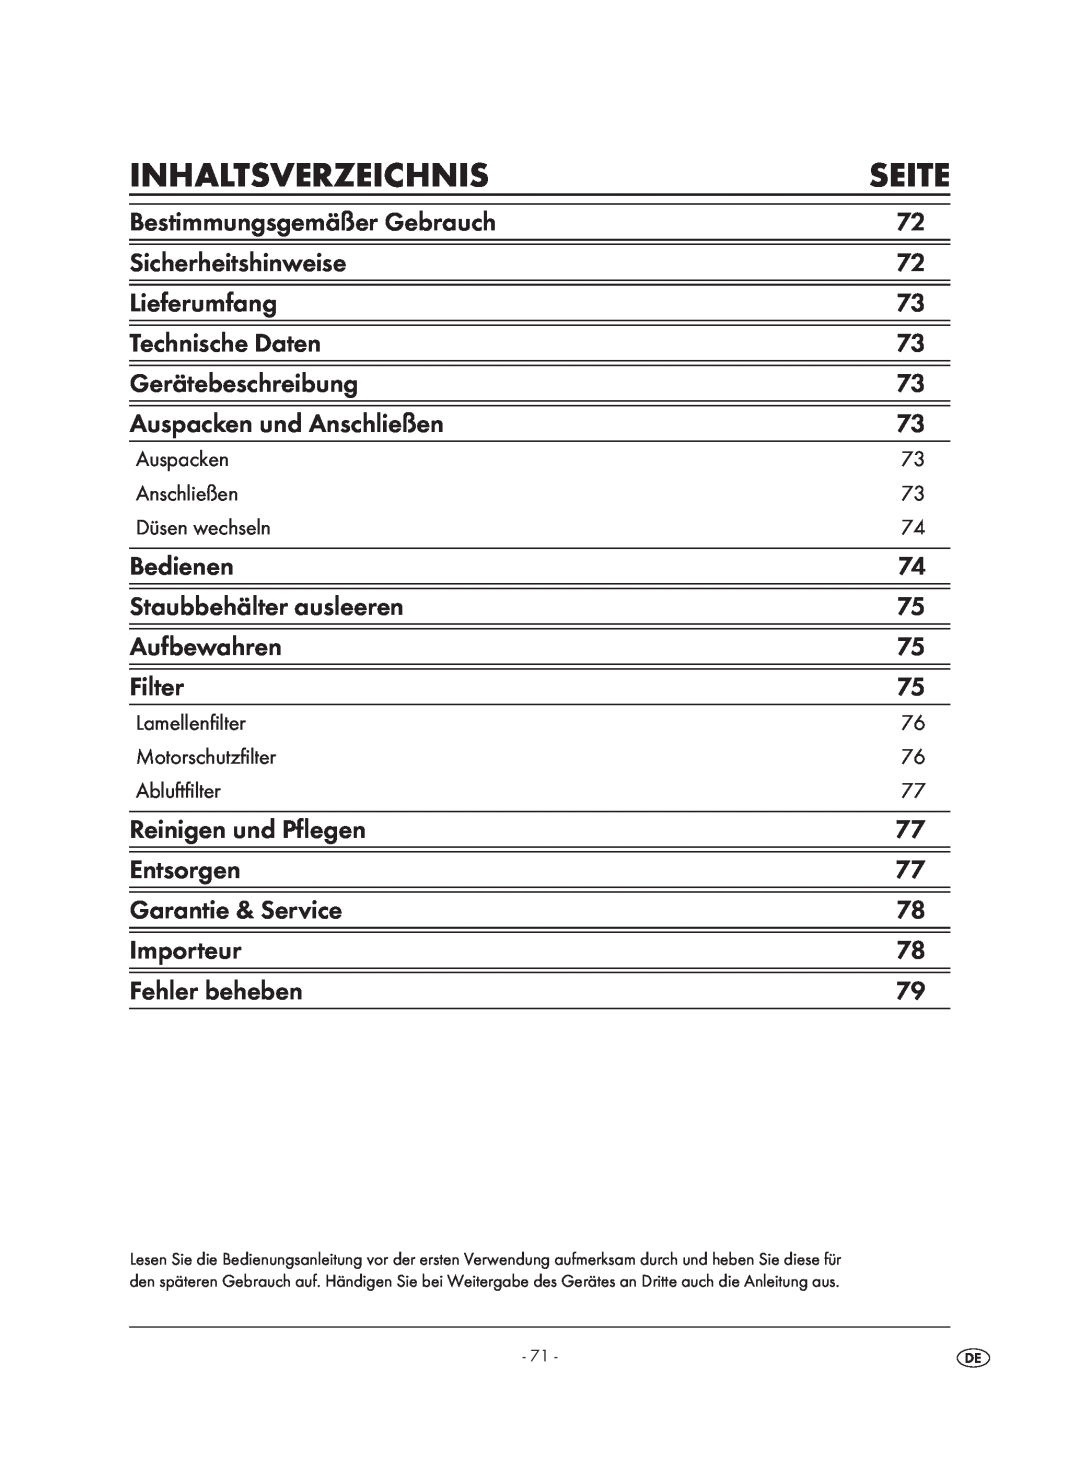 Kompernass KH 1410 operating instructions Inhaltsverzeichnis, Seite 